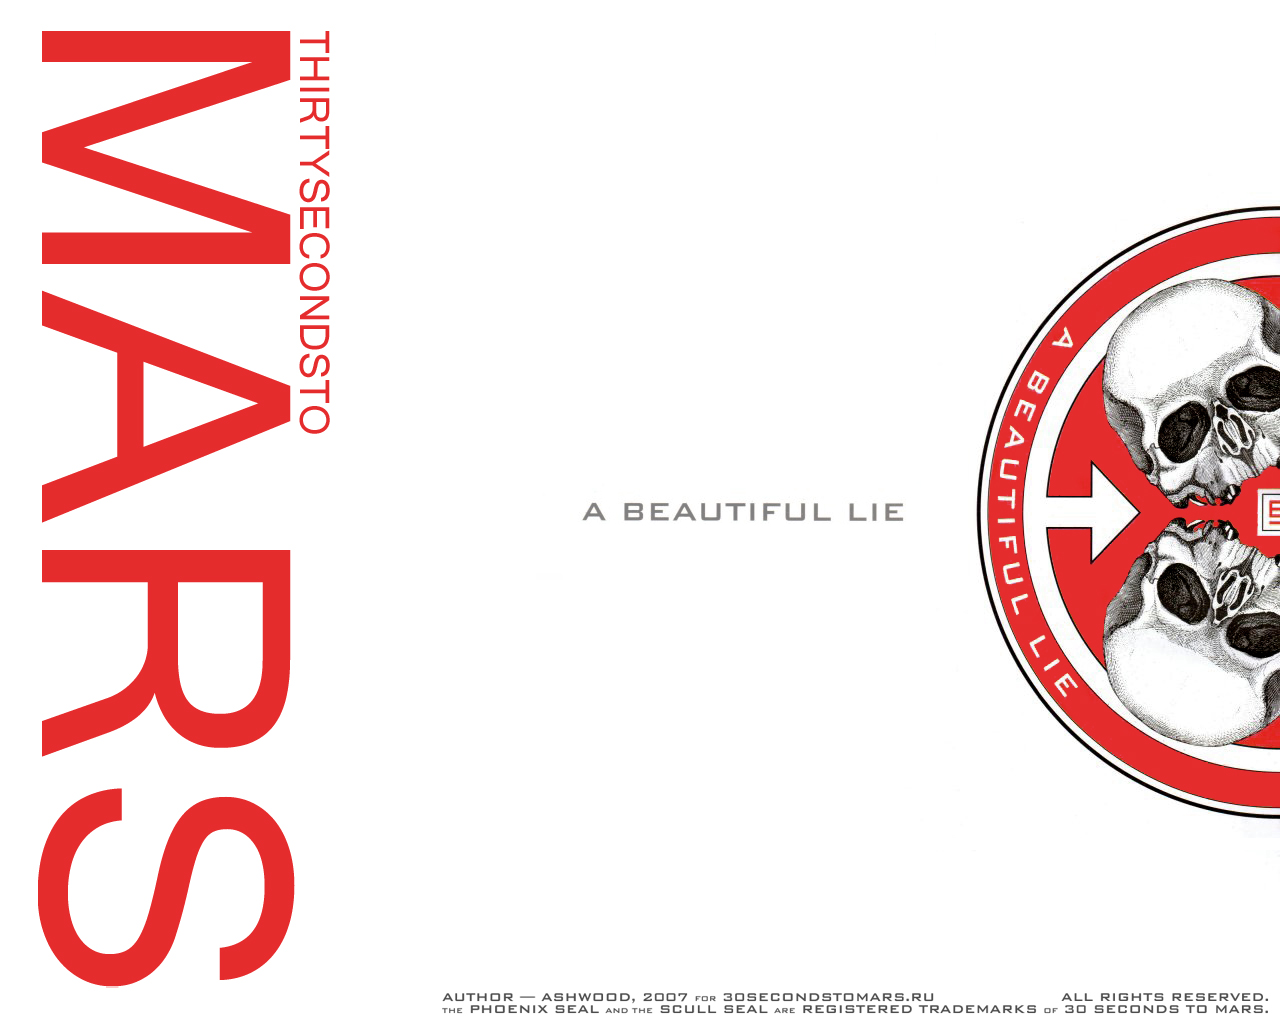 Музыка 1 секунда. 30 Seconds to Mars обложки альбомов. 30 Seconds to Mars обложка. 30 Seconds to Mars a beautiful Lie обложка. 30 Seconds to Mars альбом 2002.